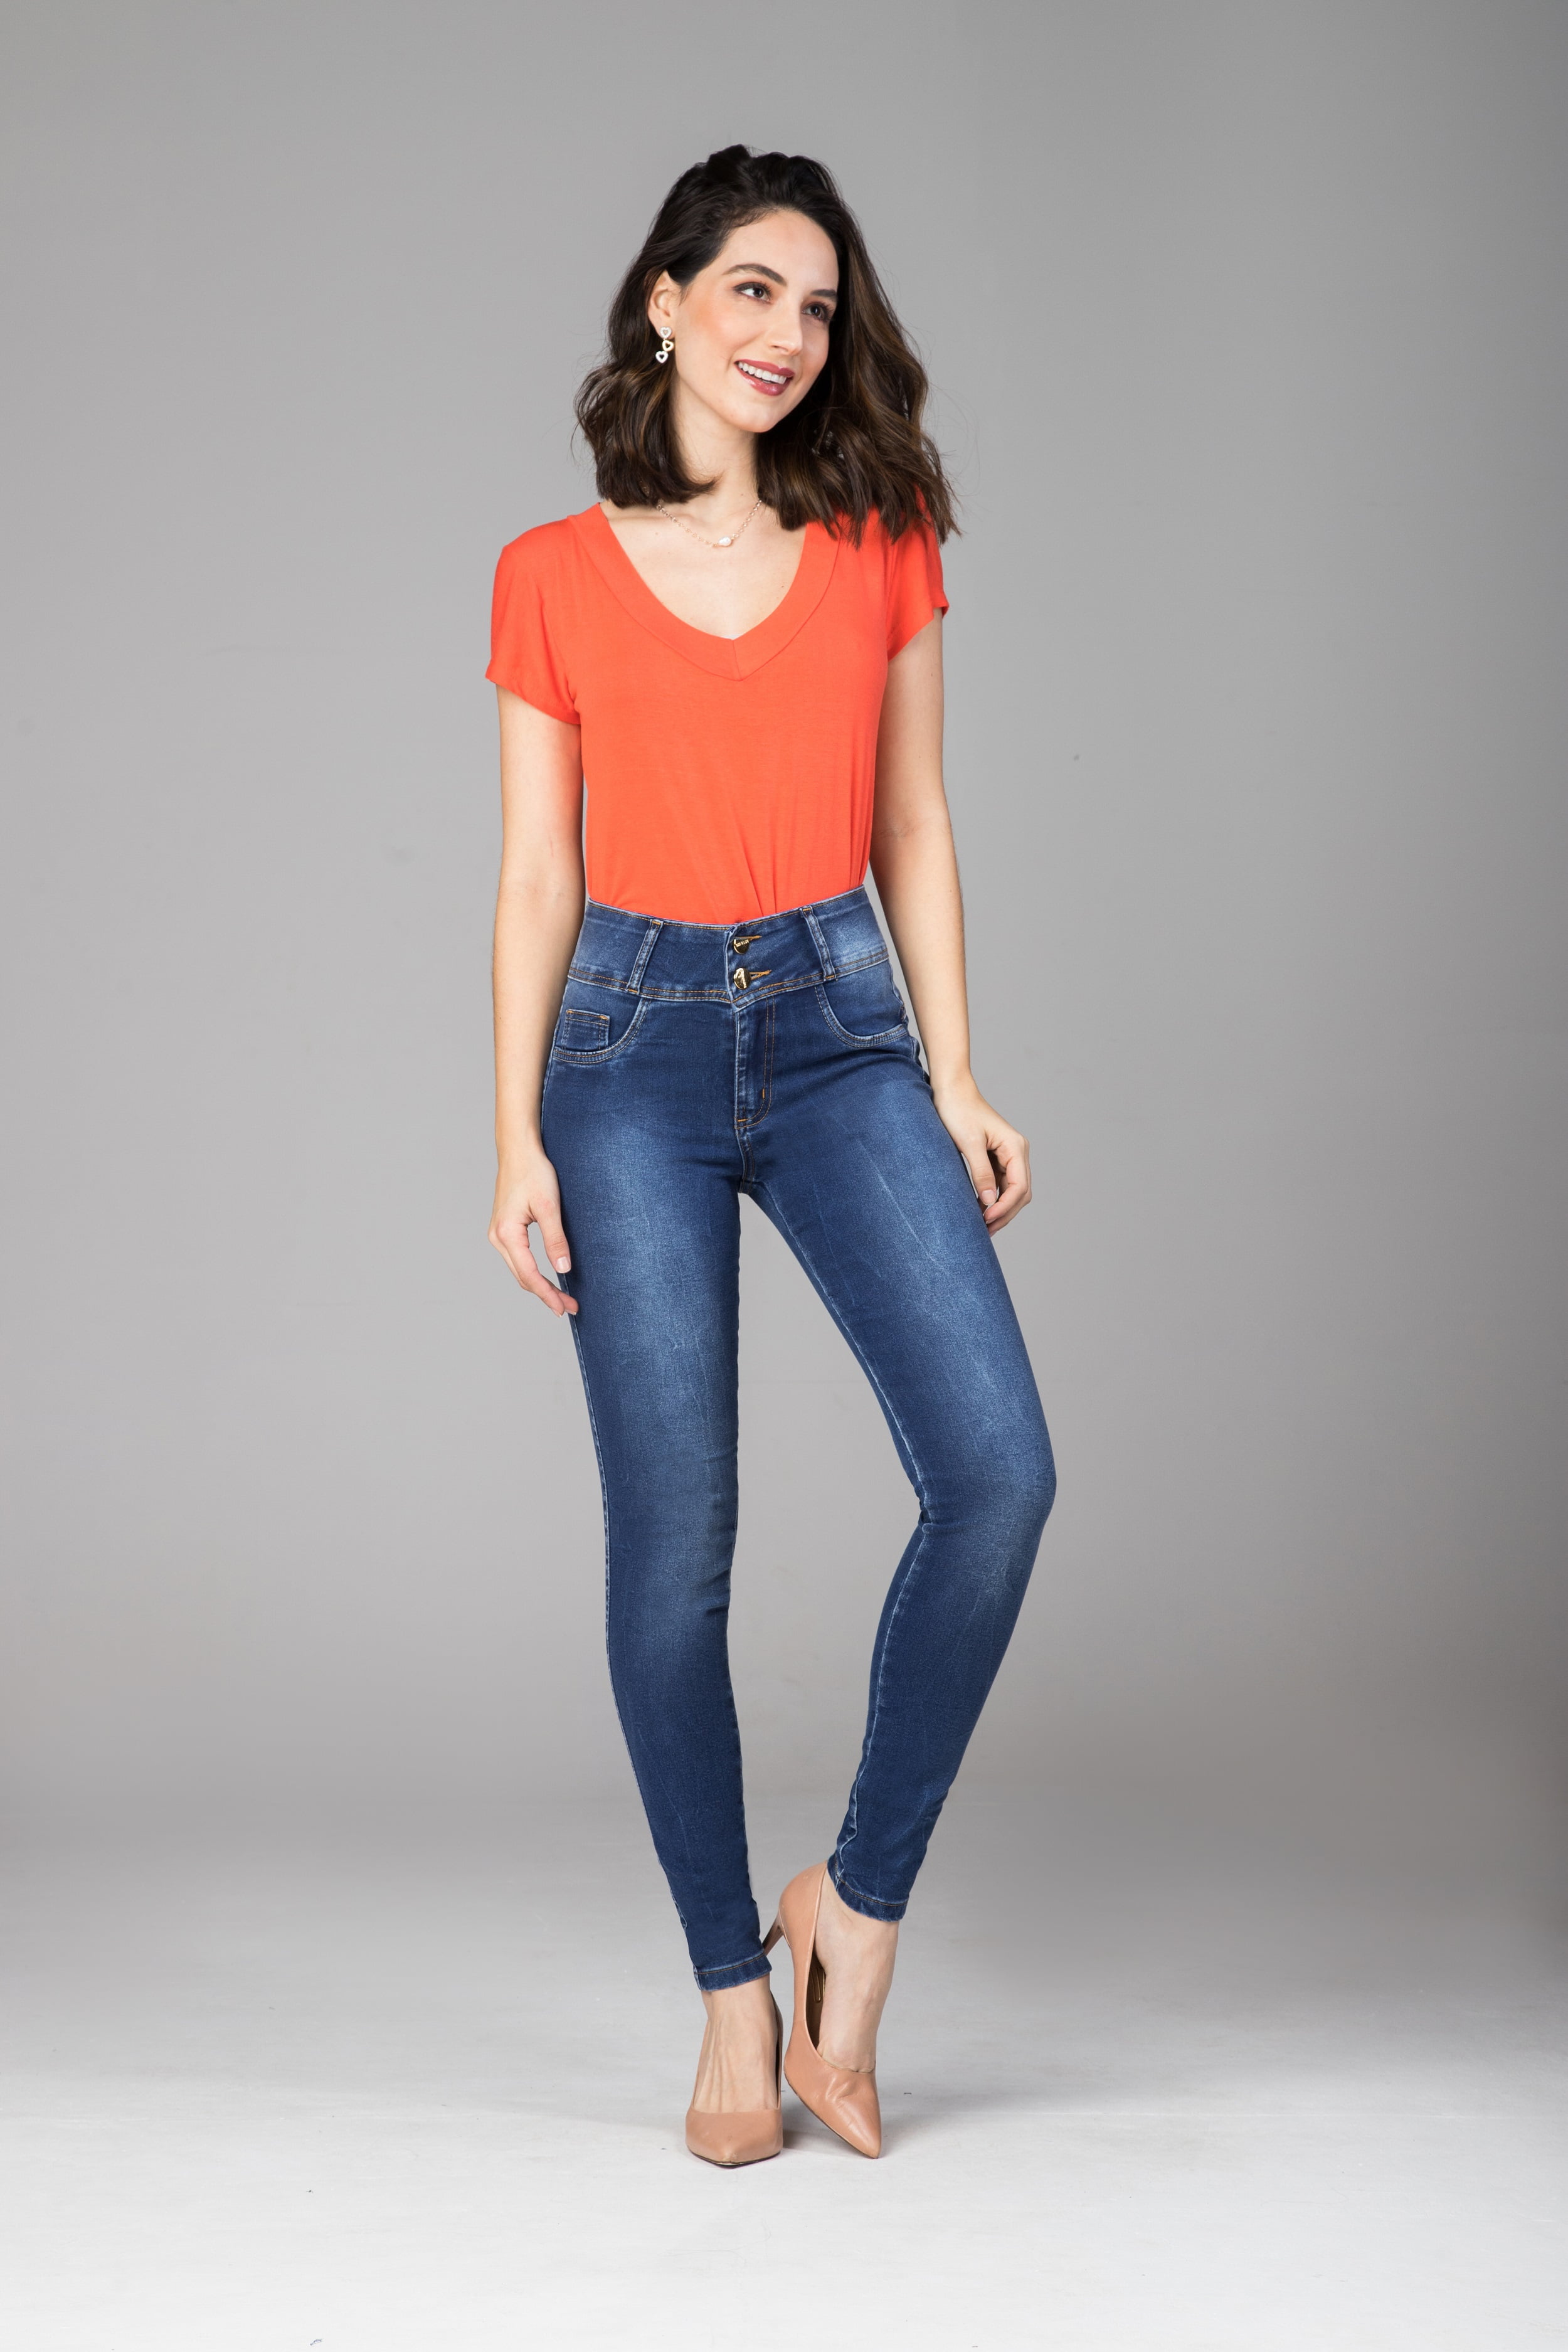 Calça Jeans feminina modelo Skinny cintura alta e levanta bumbum Linha  Premium Elastano - Panuse